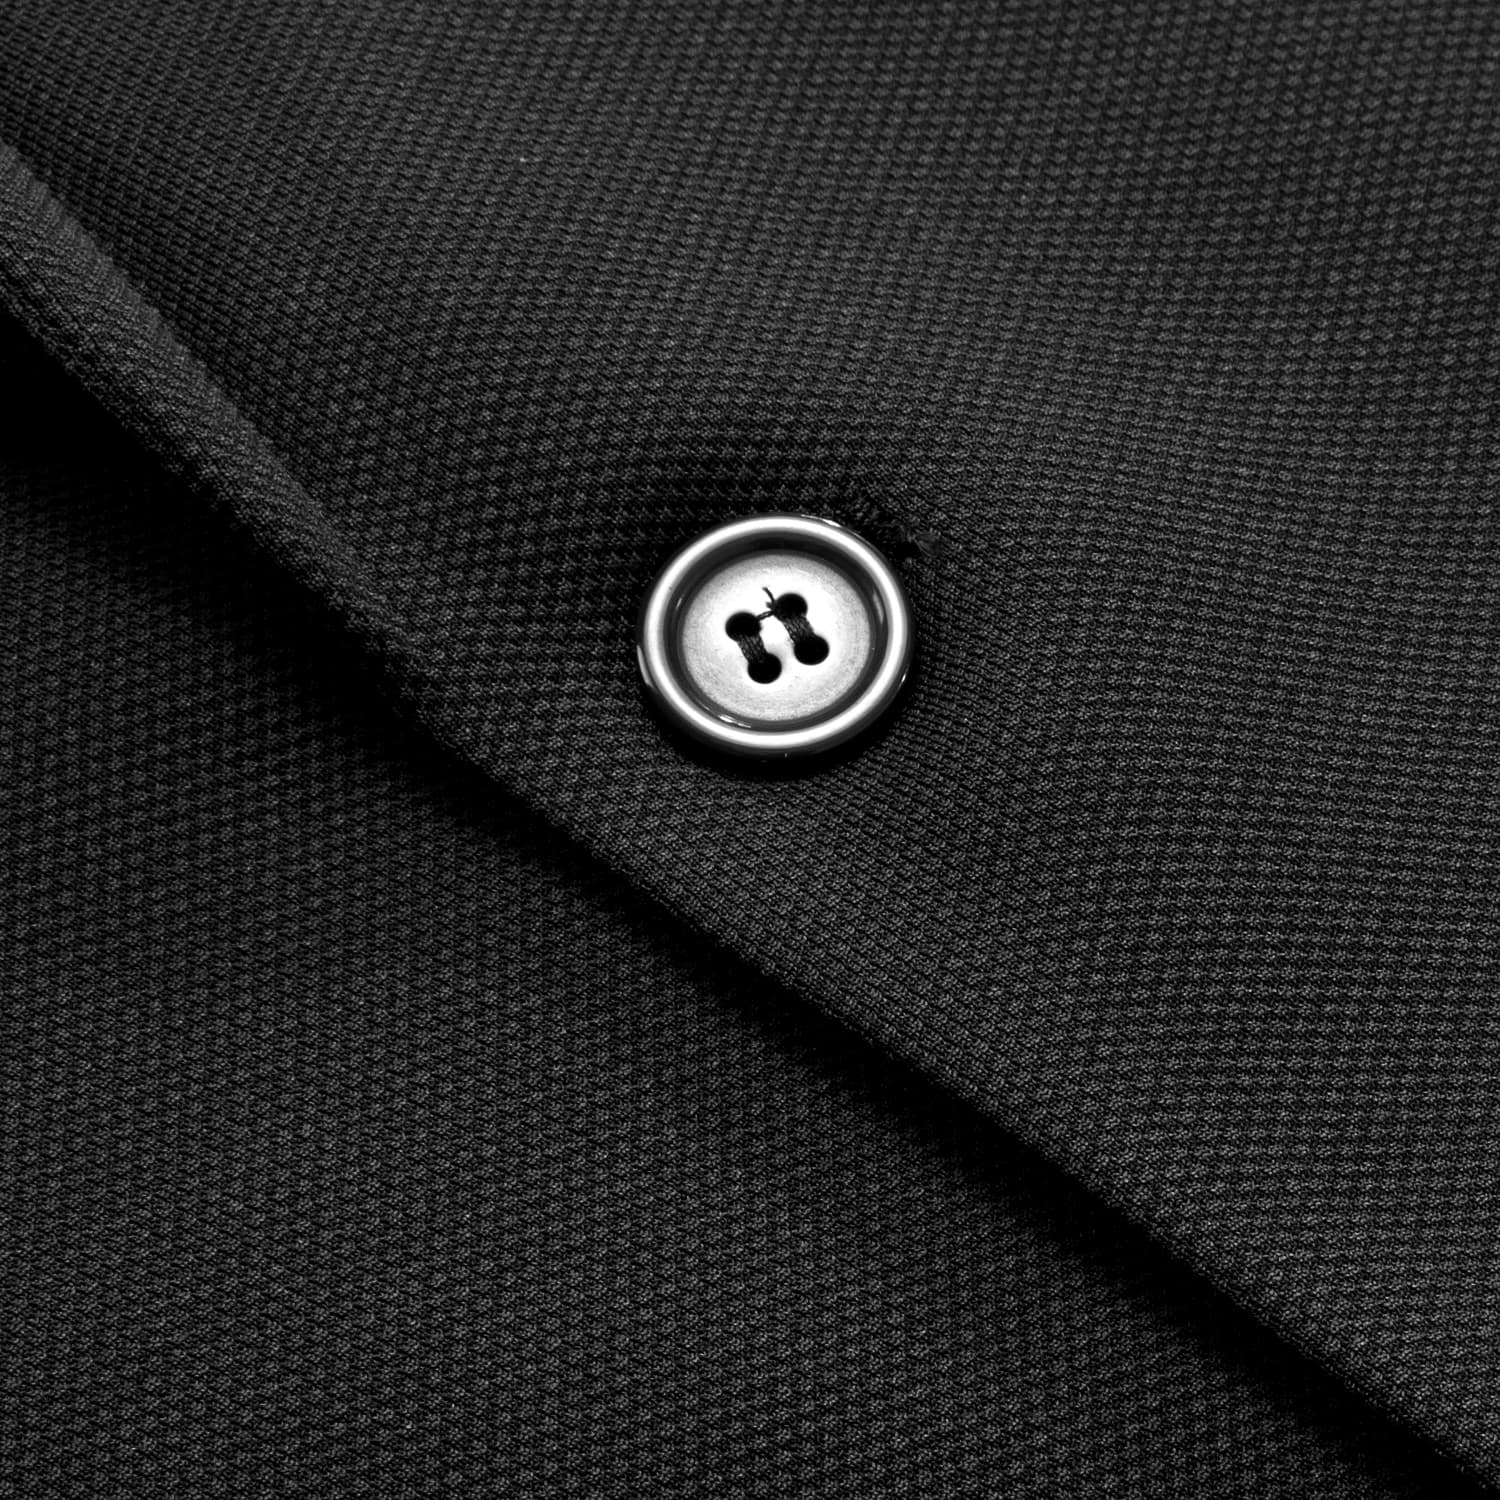 Hi-Tie Business Daily Blazer Black Men's Suit Jacket Slim Fit Coat